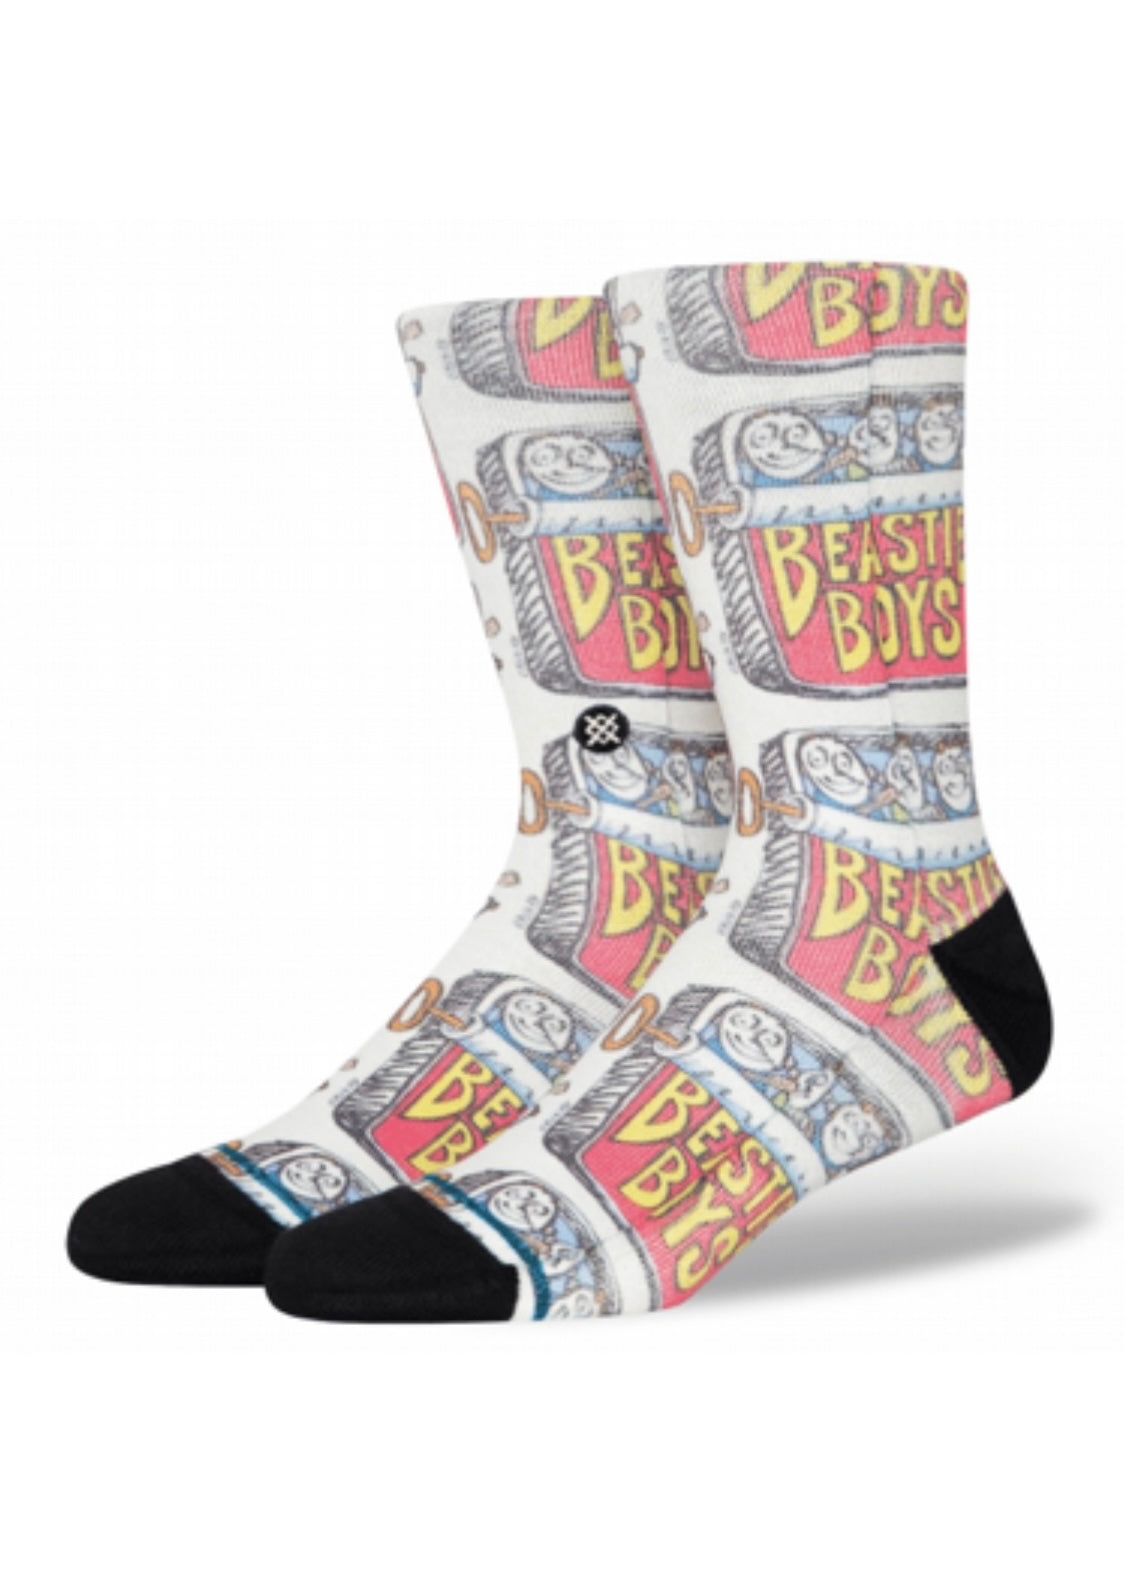 Beastie Boys Canned Crew Socks